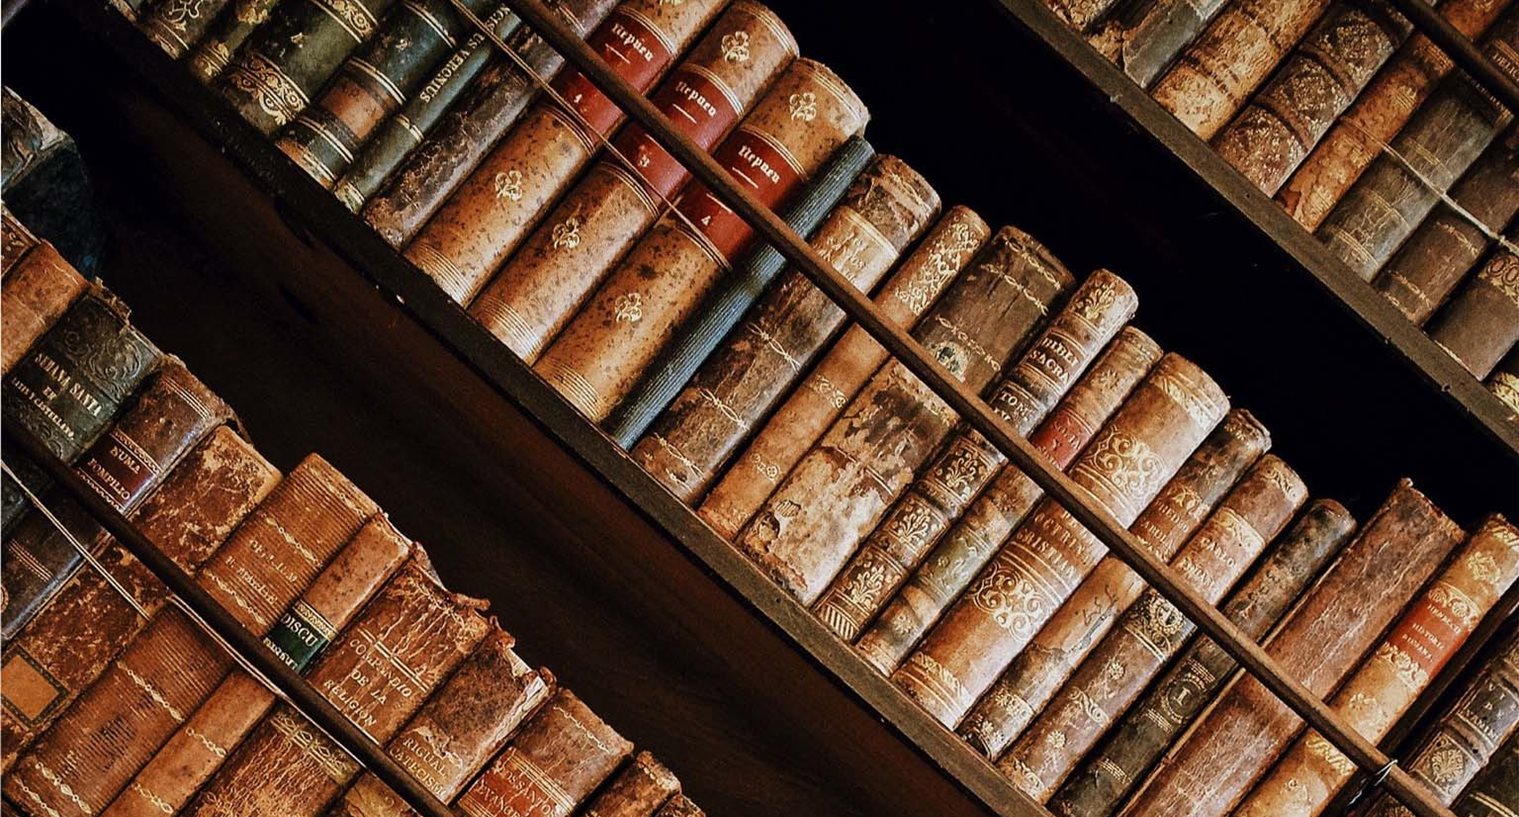 Old books on shelves (copyright - roman kraft)